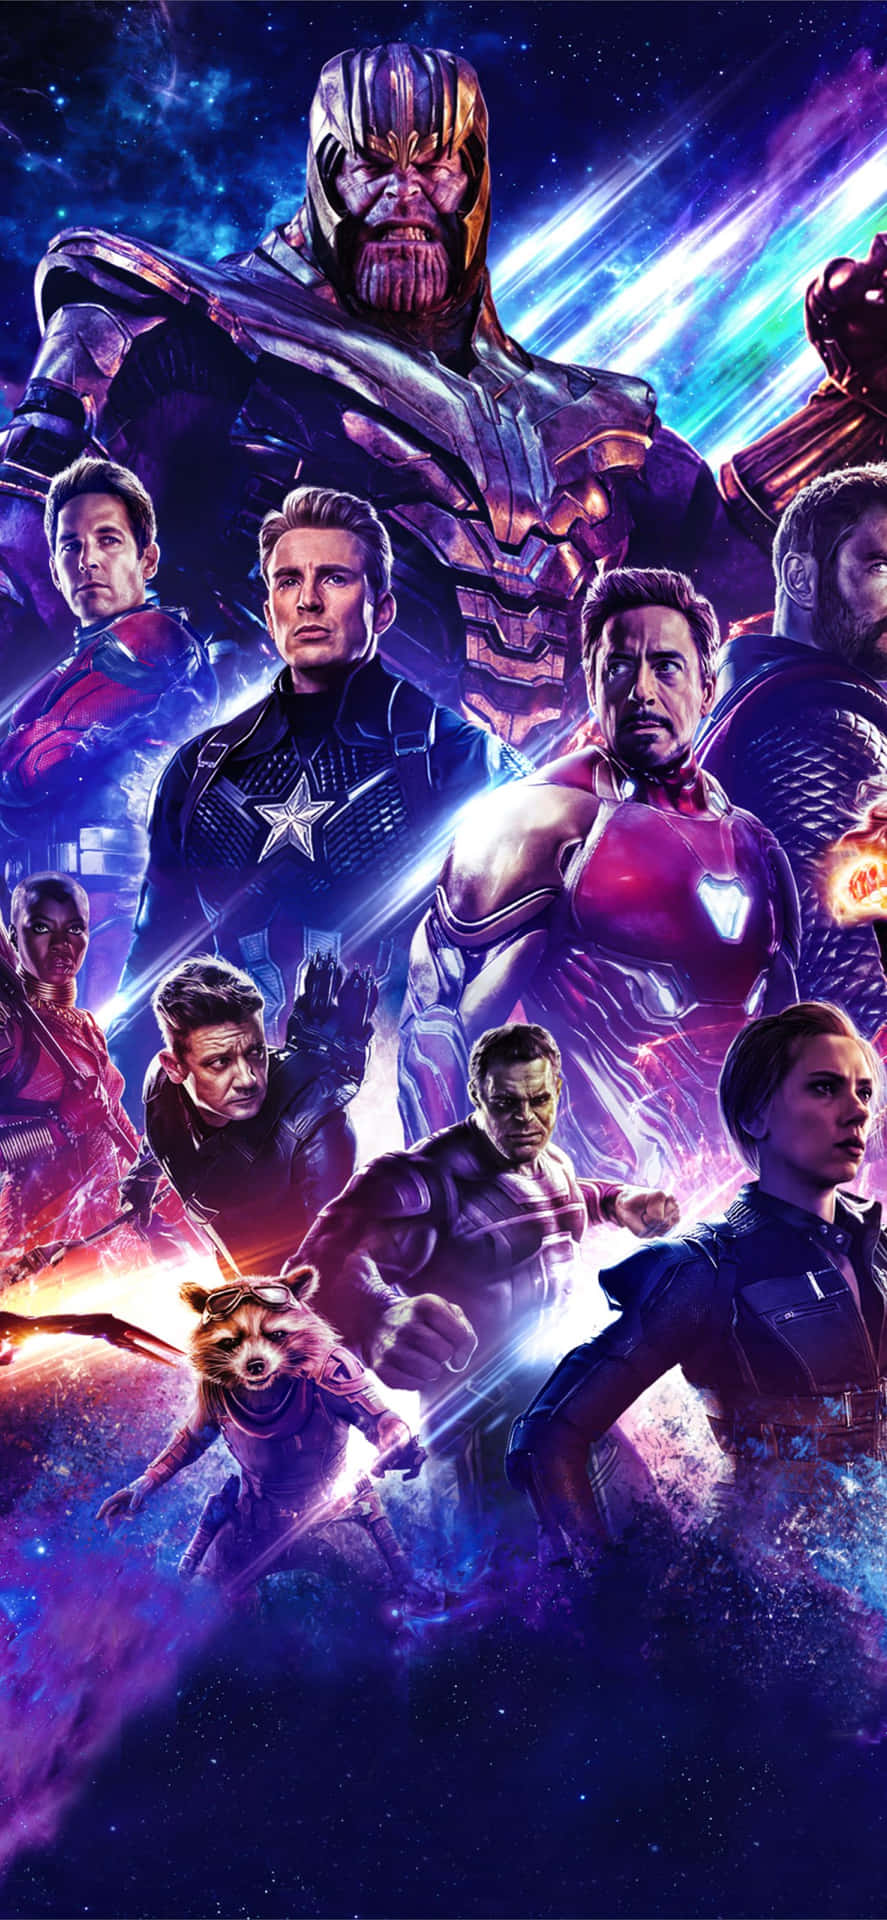 Holdir Jetzt Dein Neues Iphone Mit Dem Avengers Endgame Theme Wallpaper